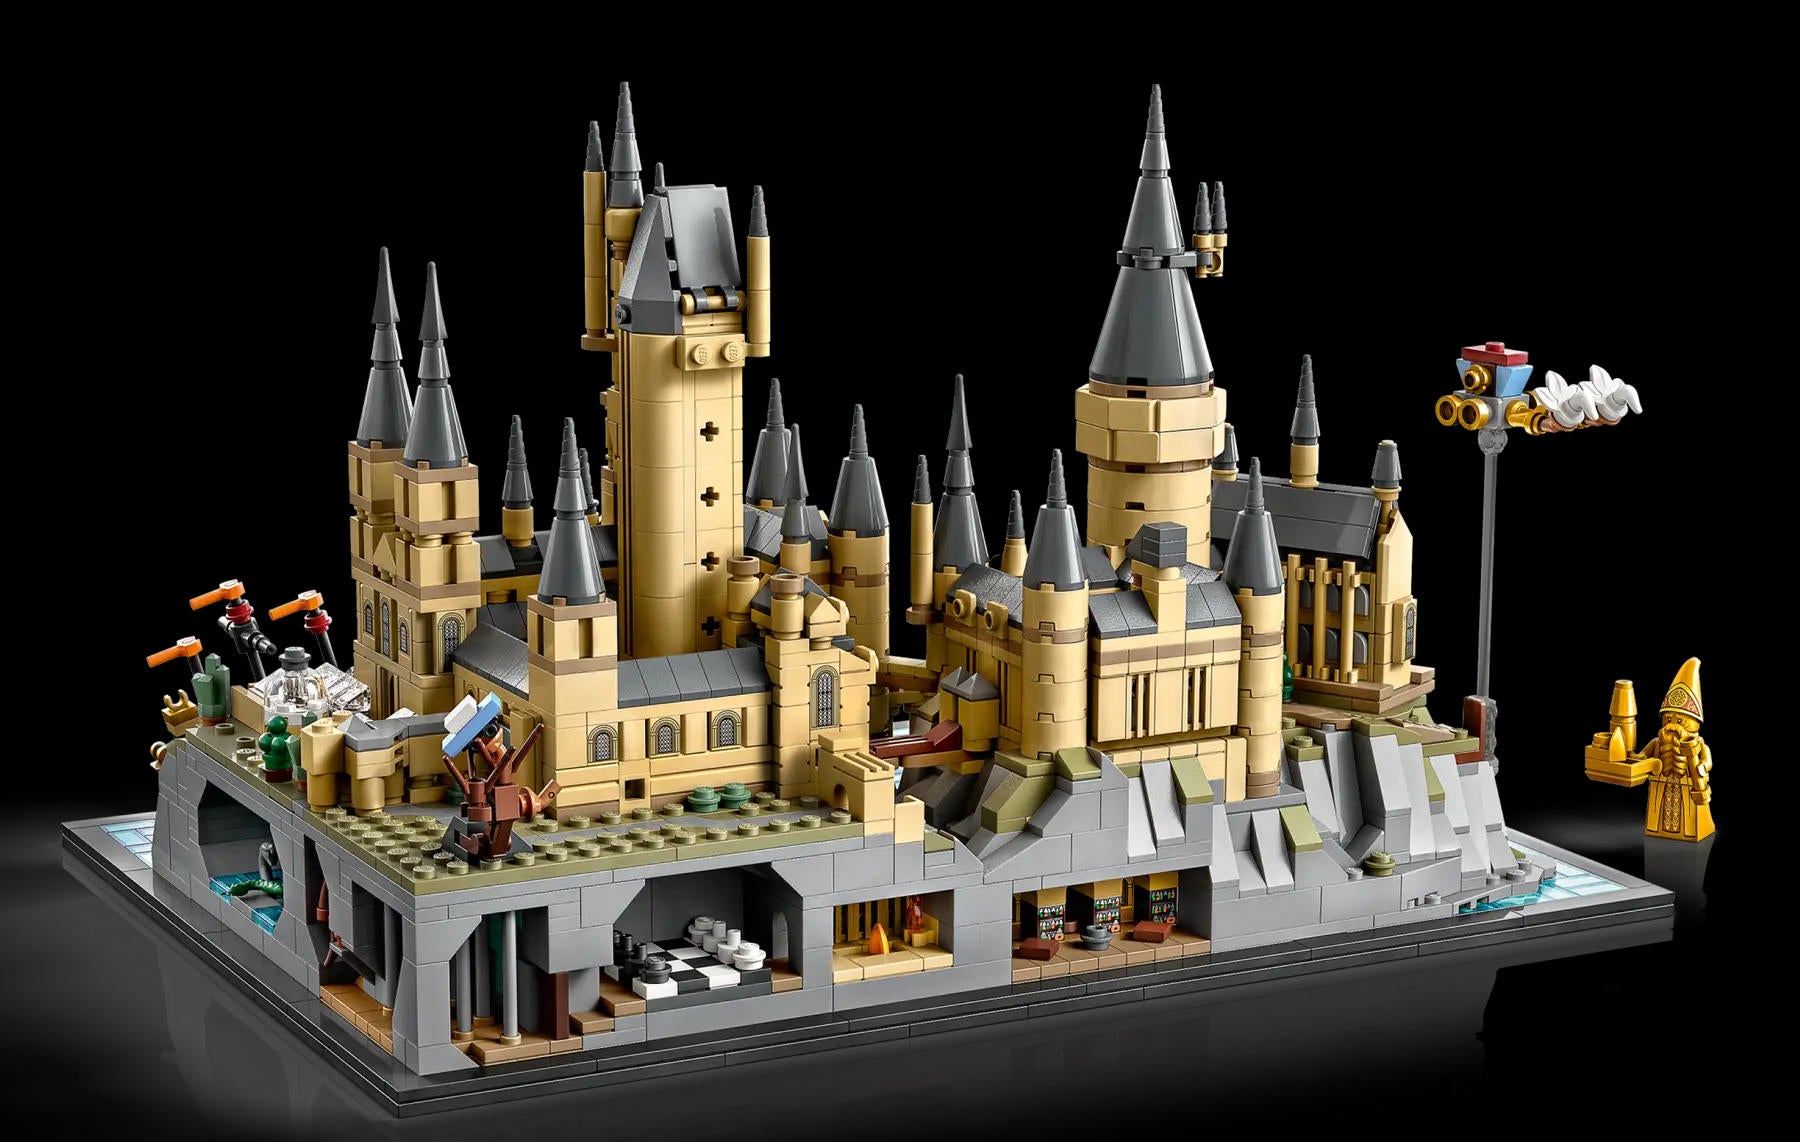 LEGO Harry Potter Hogwarts Castle and Grounds Set Unveiled